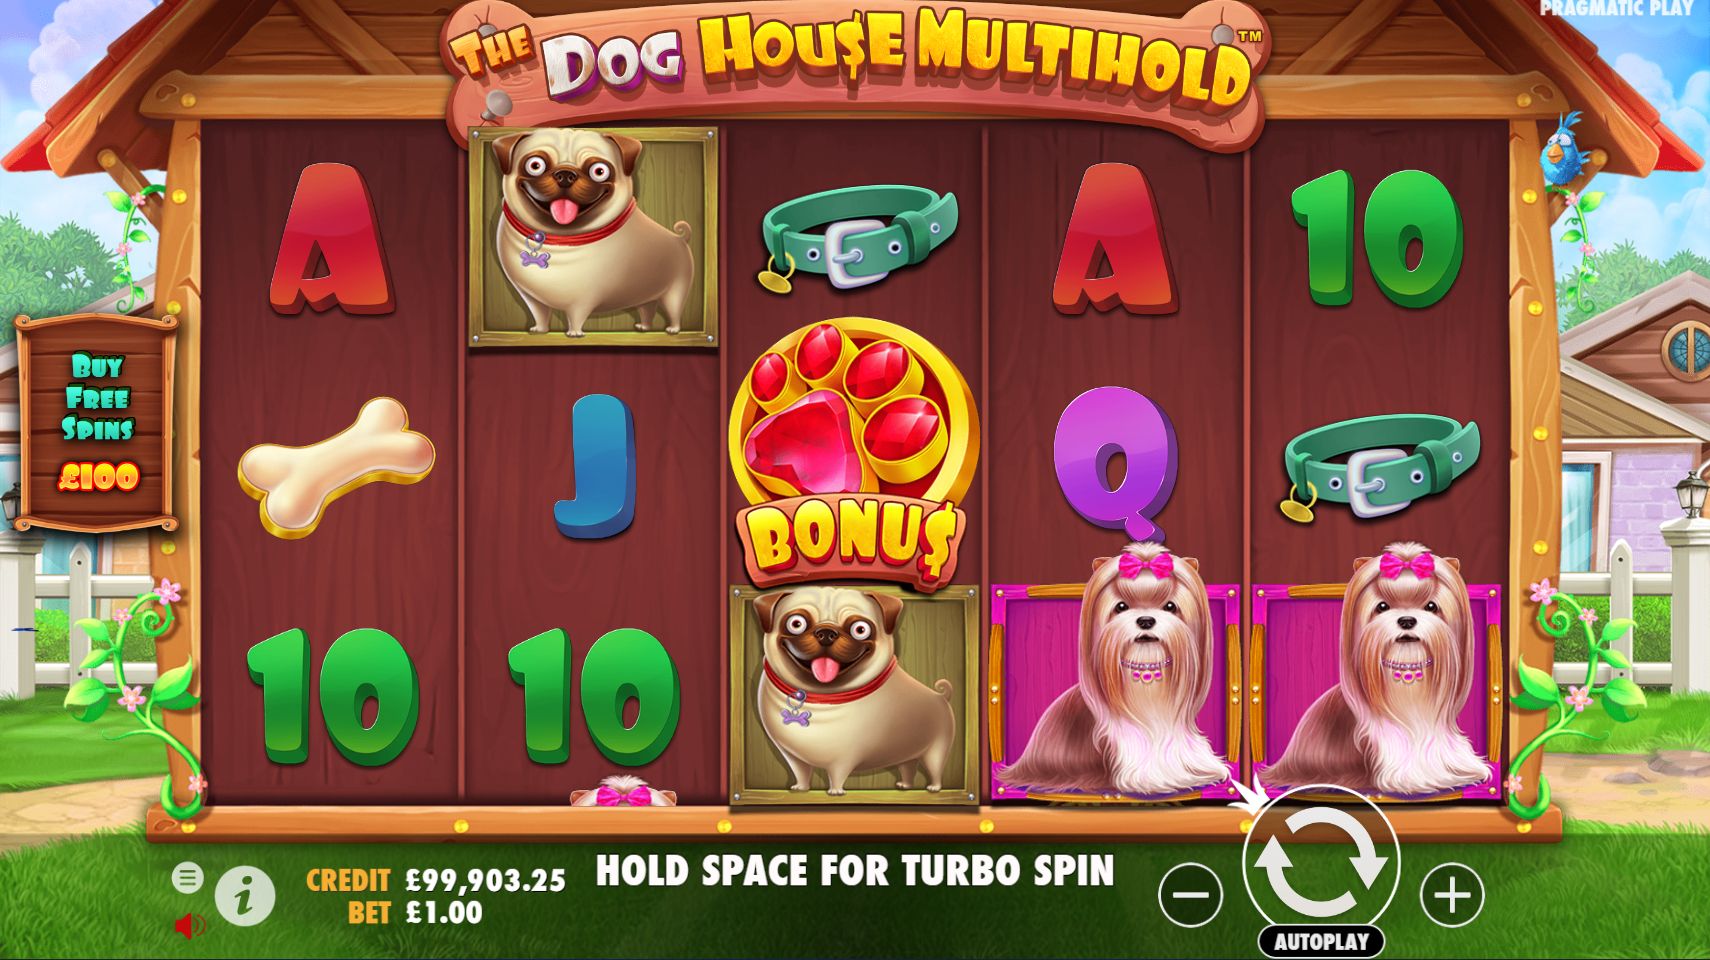 The Dog House Multihold pragmatic play slot online demo